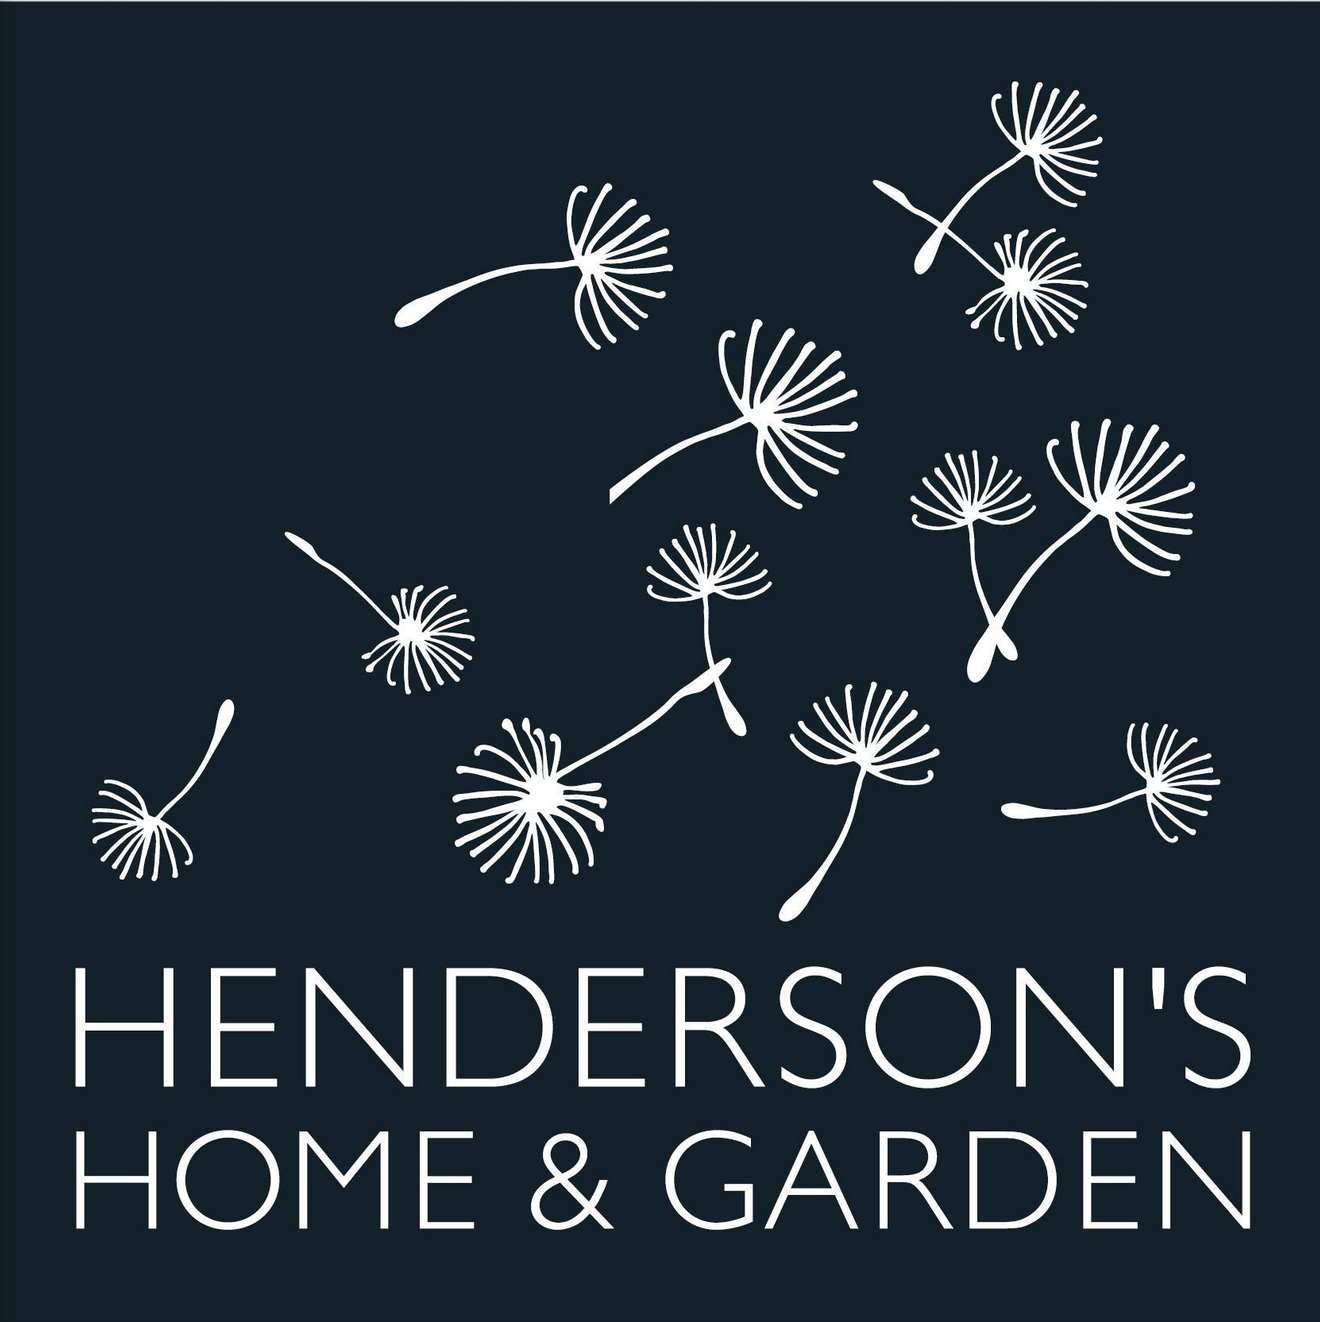 Henderson's Home & Garden